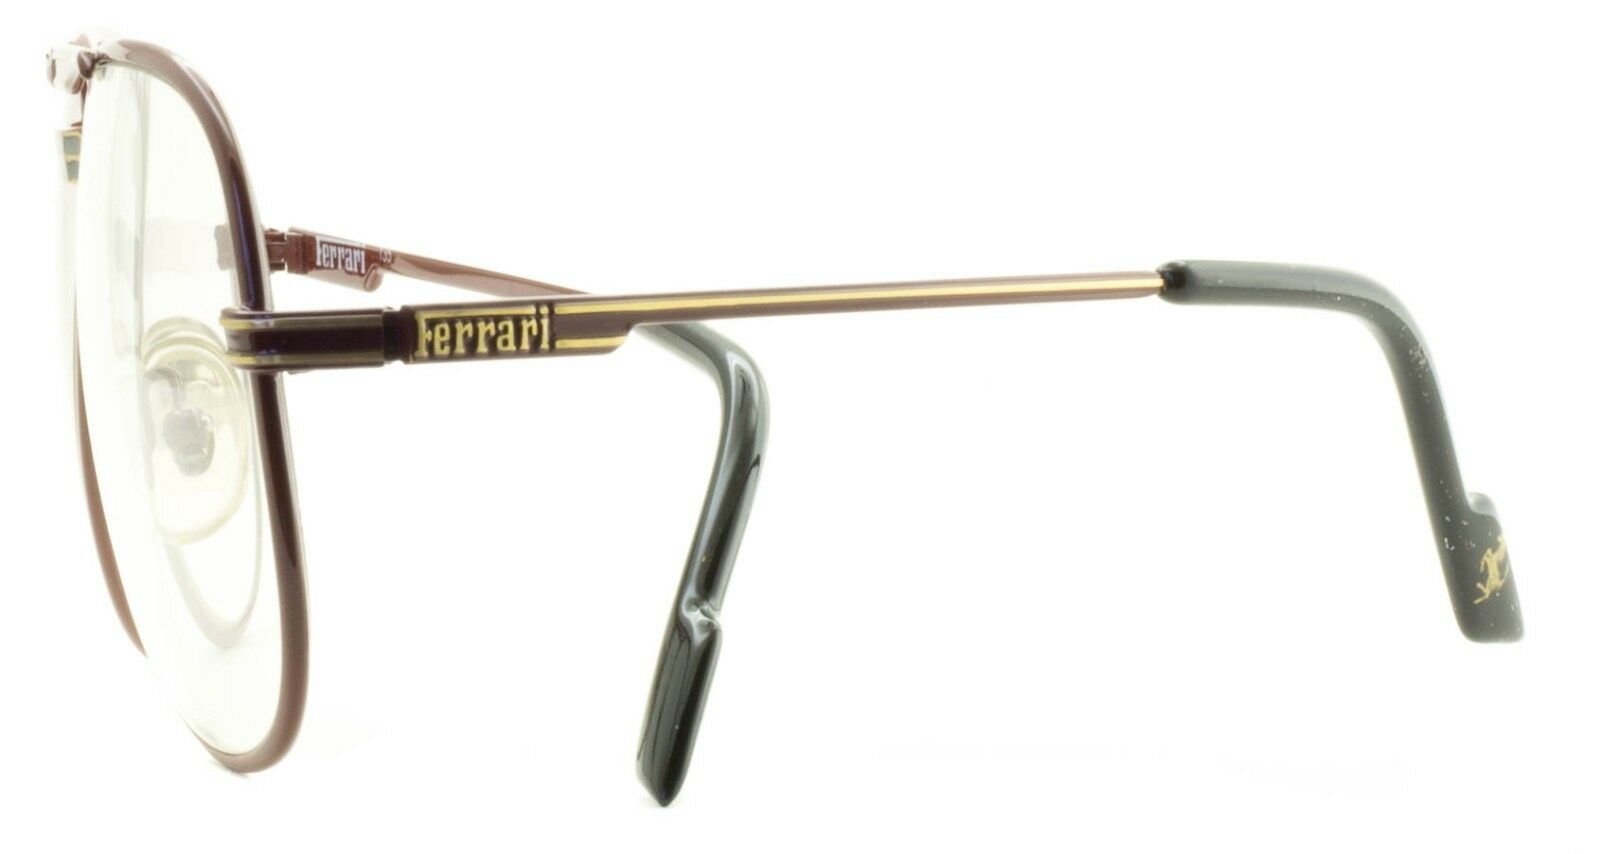 FERRARI F 13 580 Vintage RX Optical Eyewear FRAMES NEW Eyeglasses Glasses ITALY